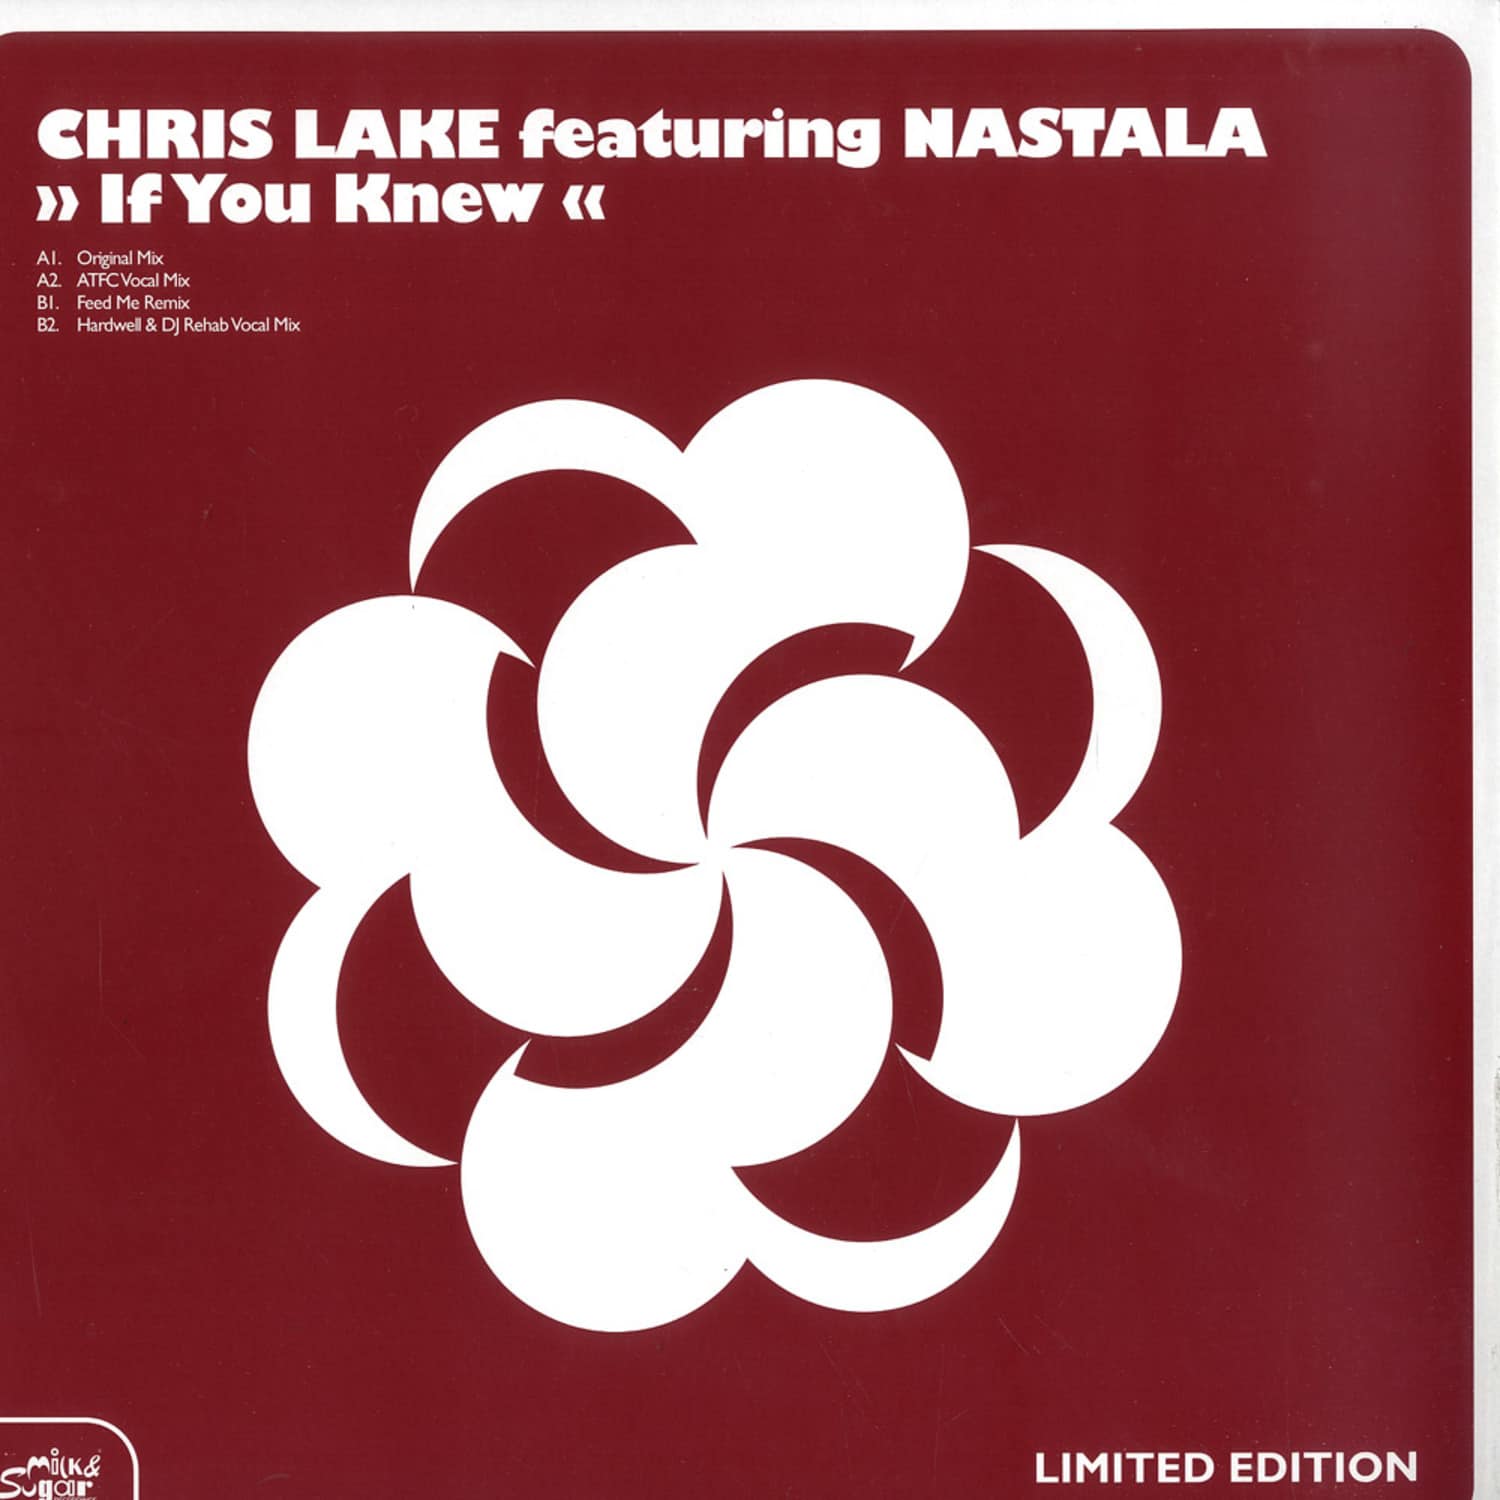 Chris Lake feat Nastala - IF YOU KNEW